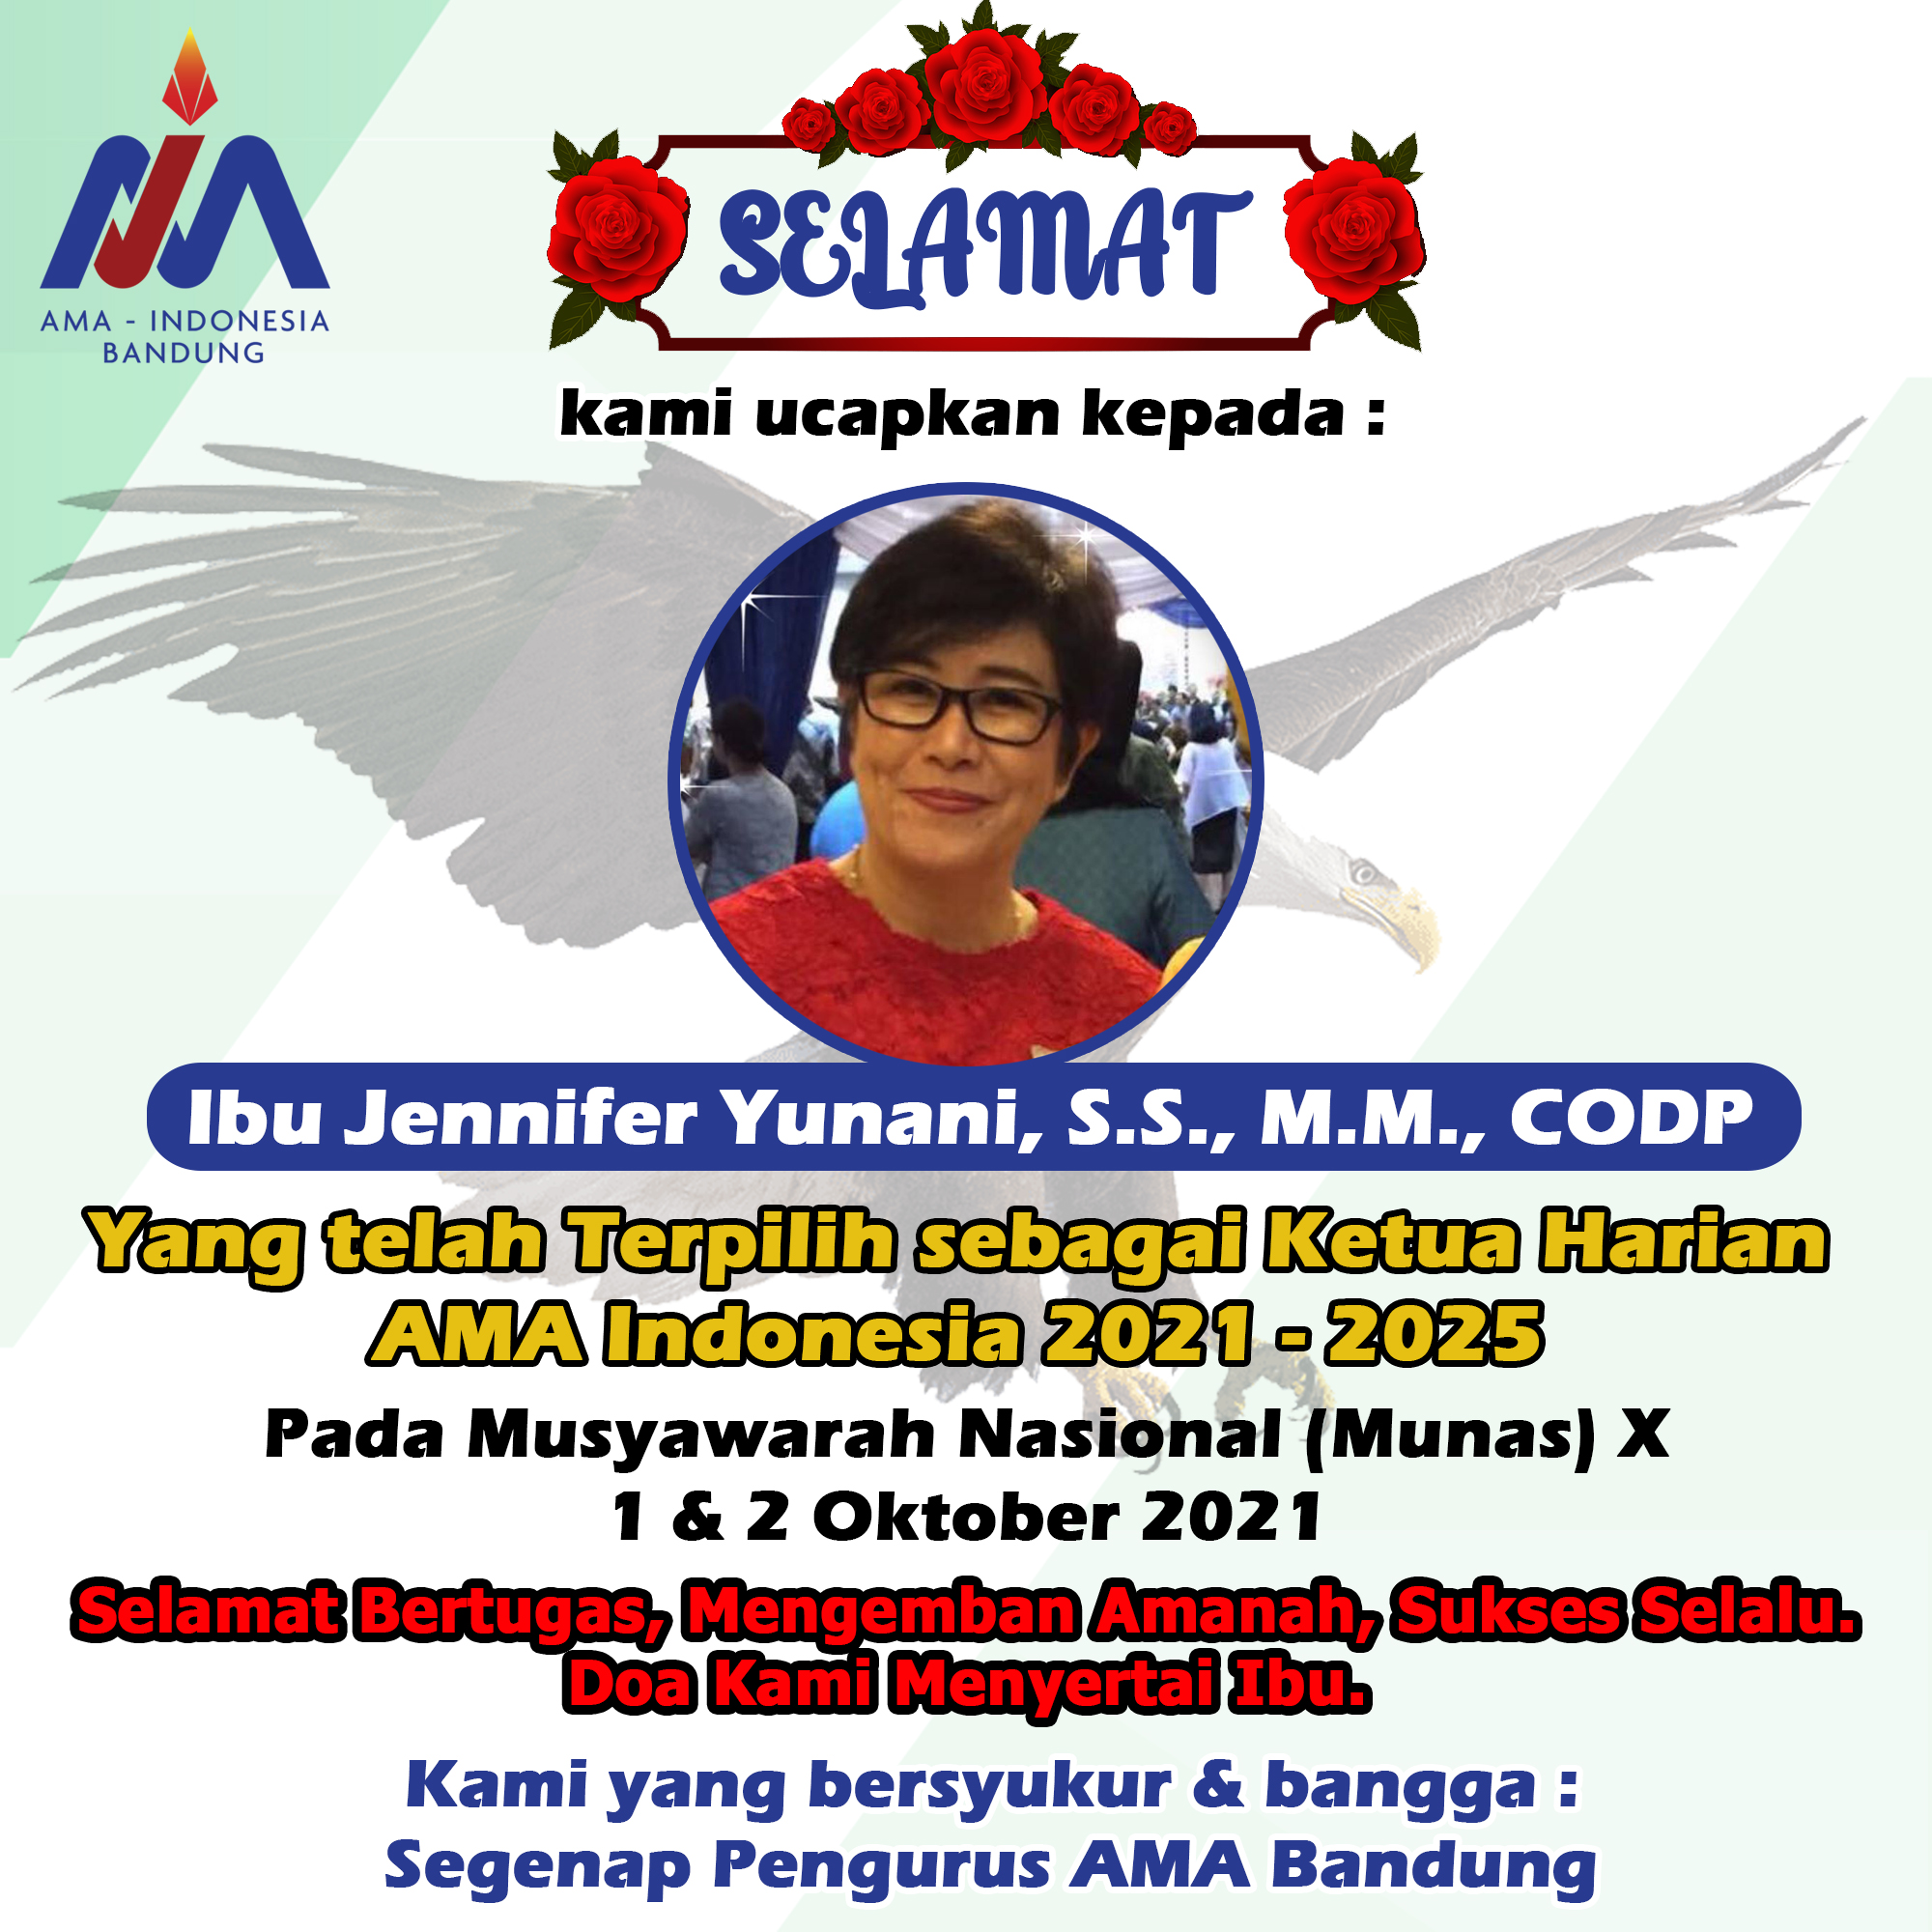 Ketua Harian AMA Indonesia Periode 2021 - 2025